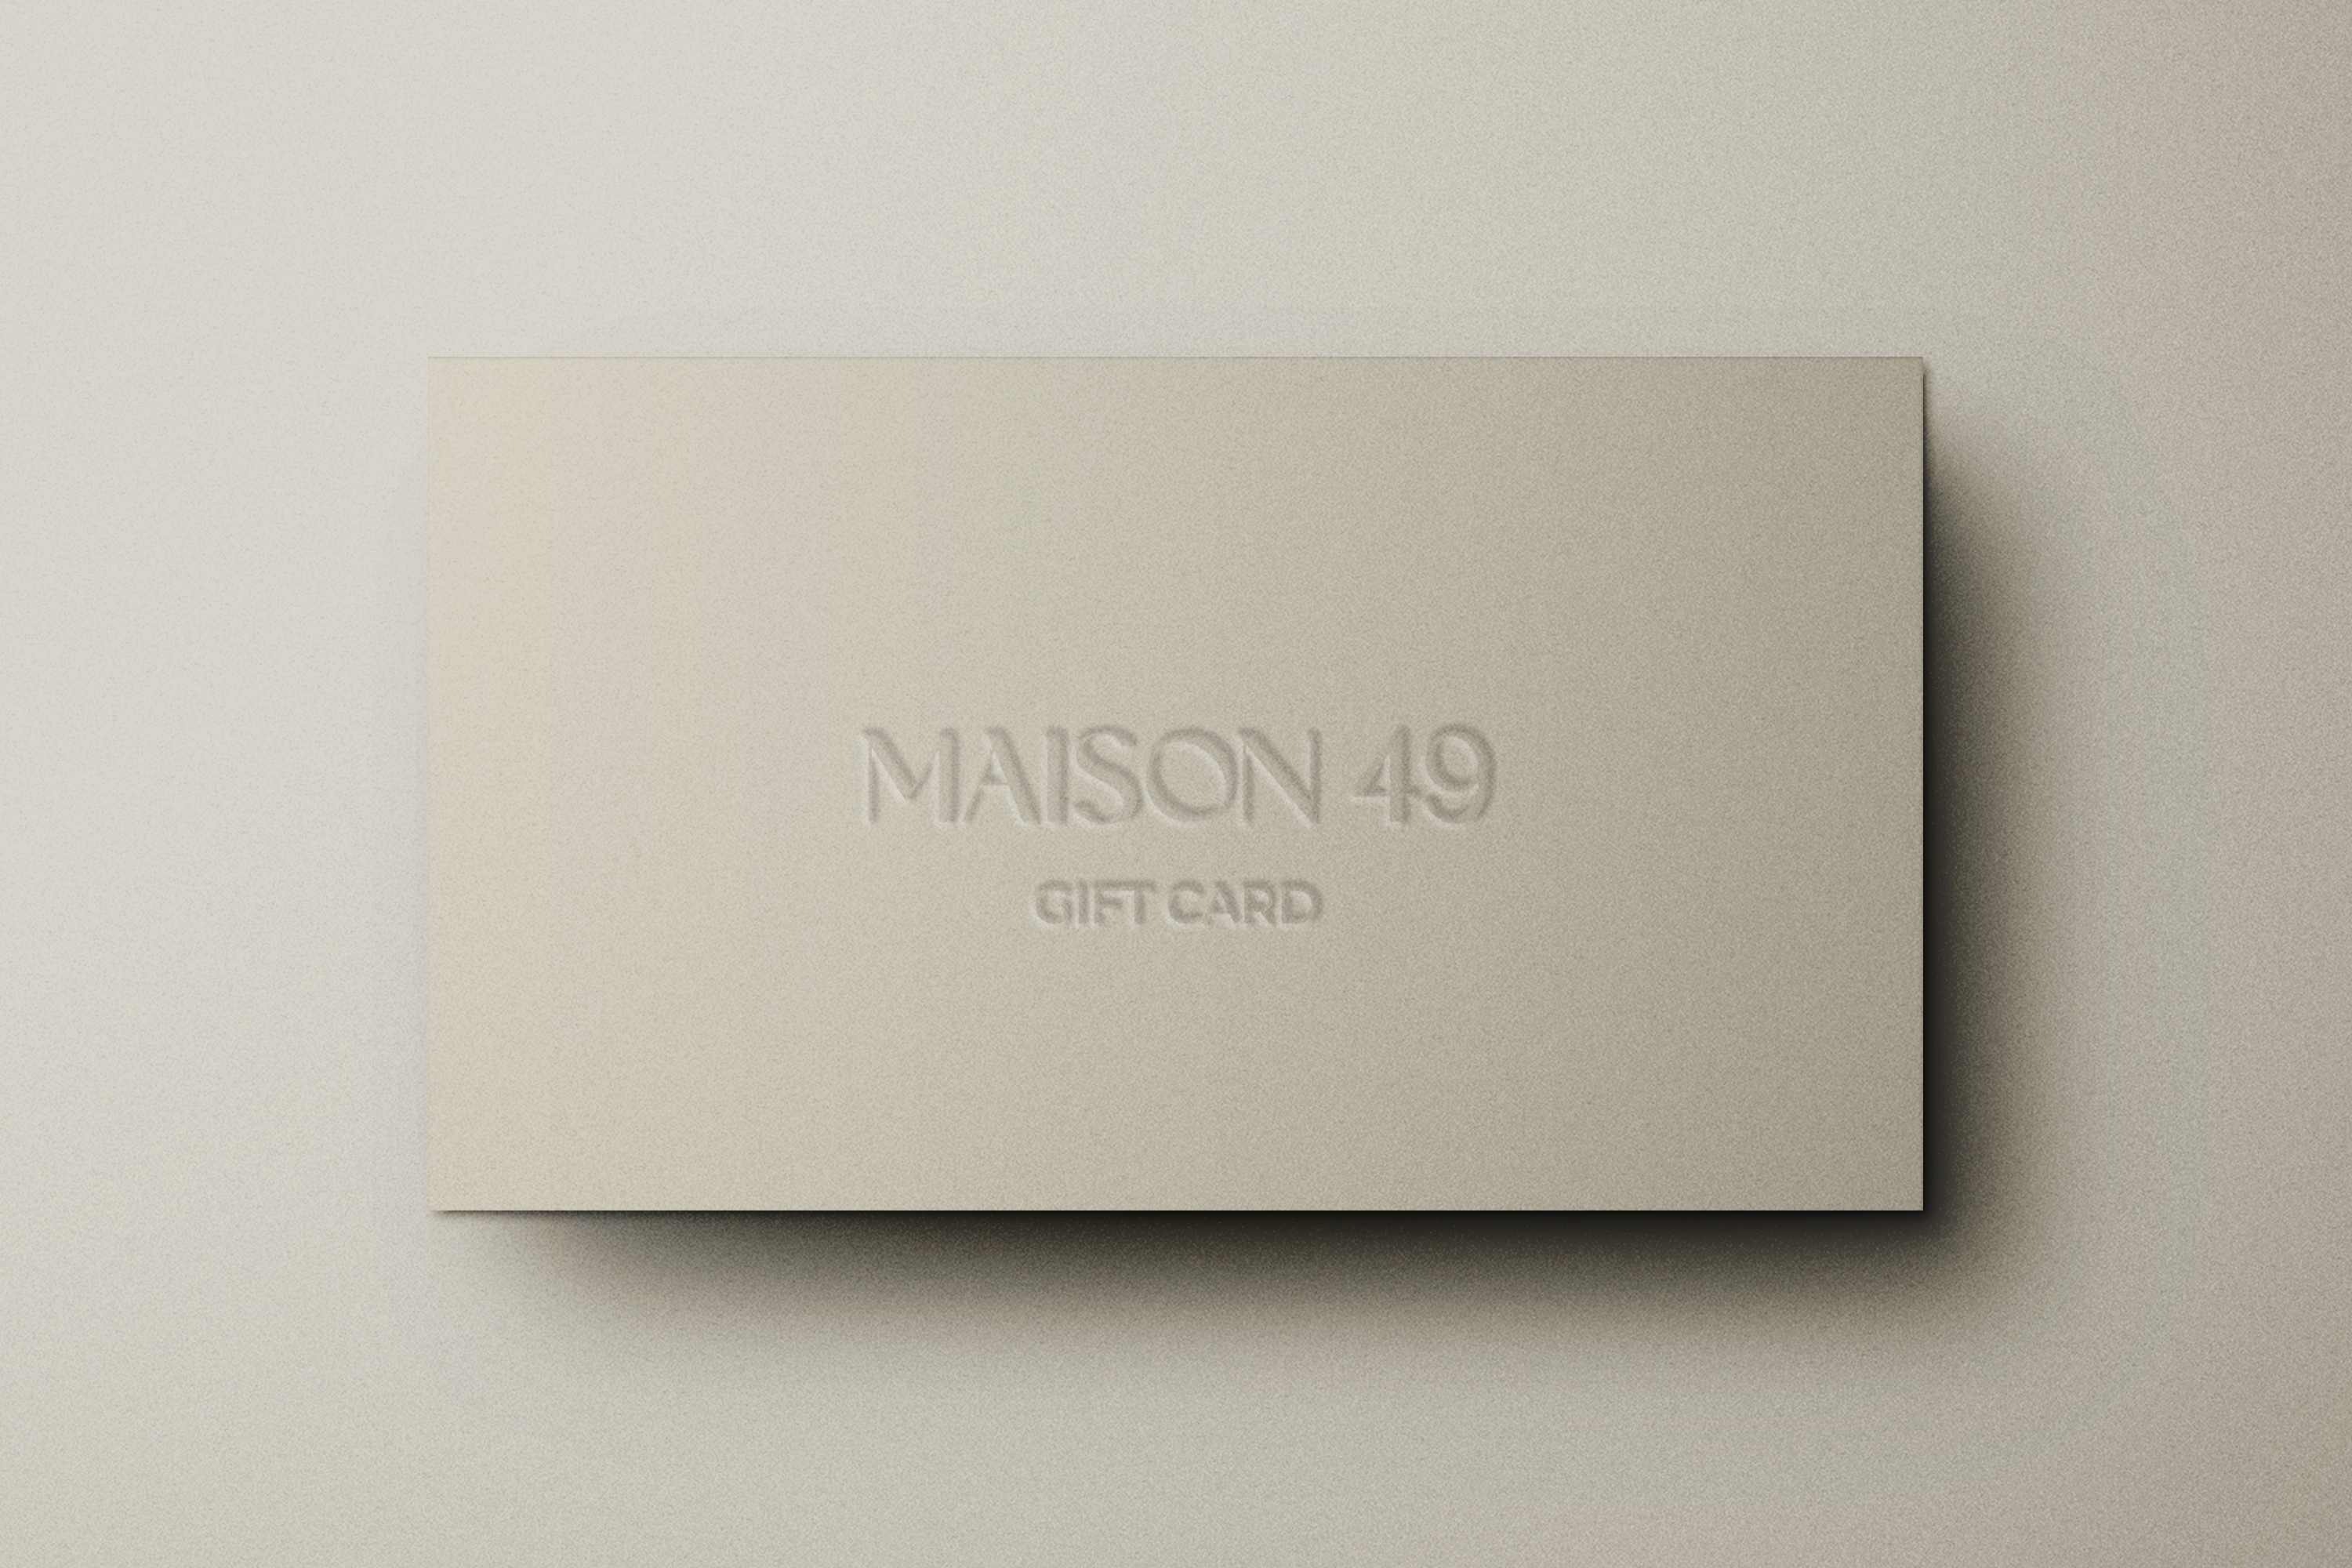 Maison 49 Gift Card